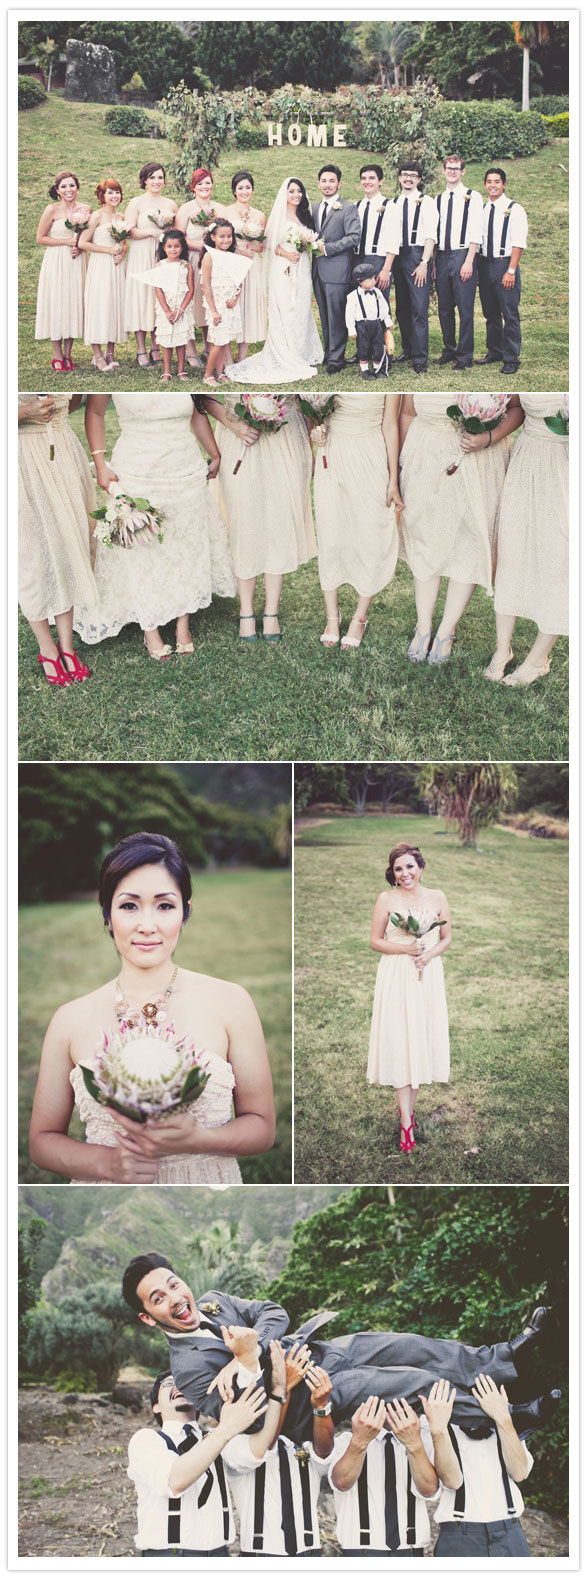 blush colored bridesmaids dresses